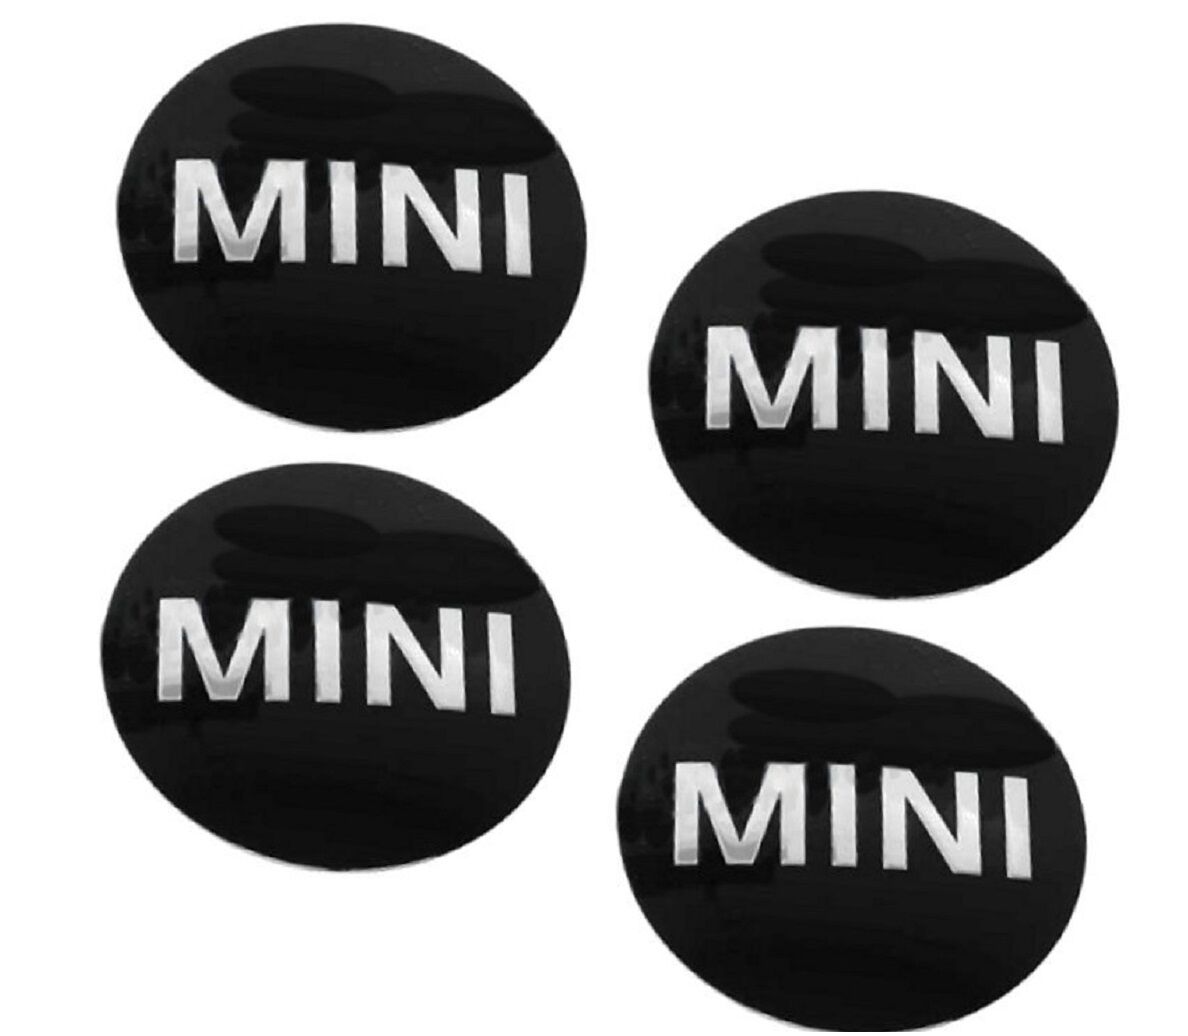 NEW For MINI COOPER Wheel Cap Center Emblem Cooper MINI Sticker 36 13 6 758 687